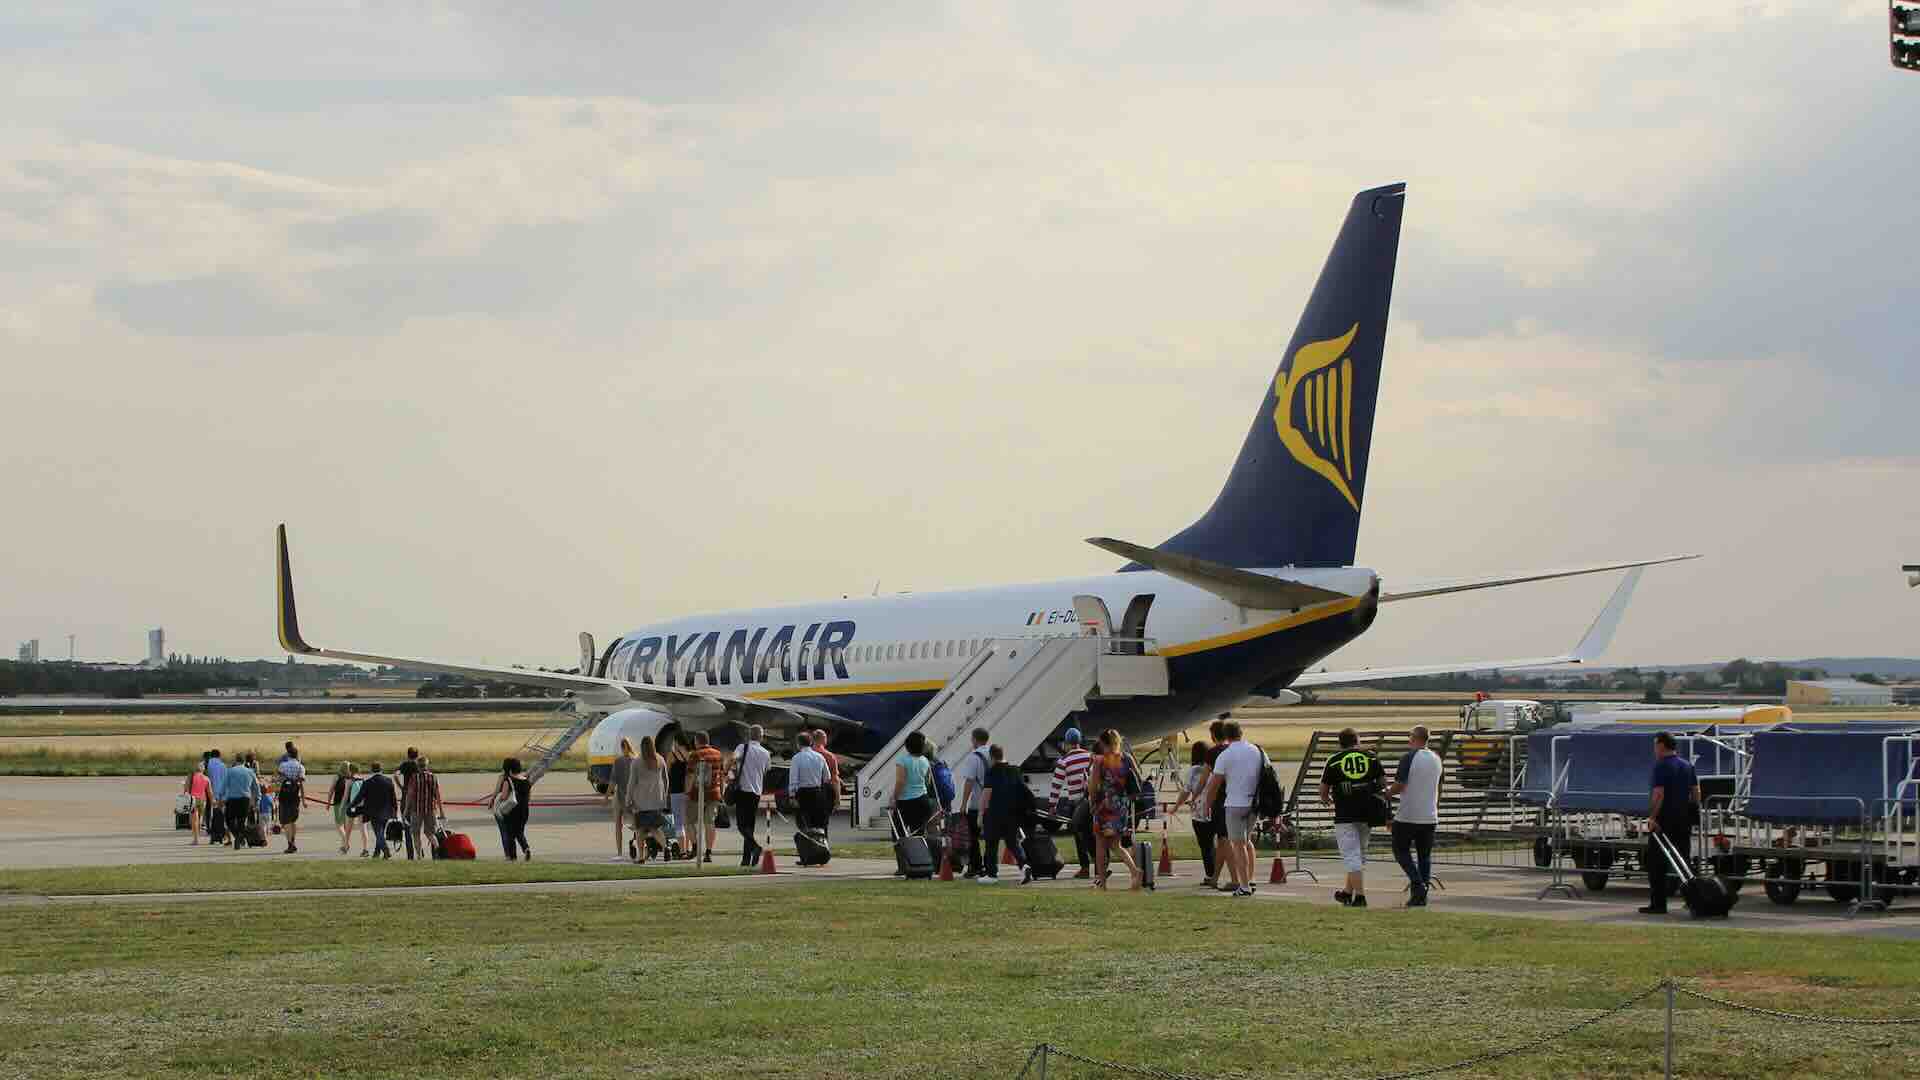 Ryanair voli low cost offerta flash per 48 ore